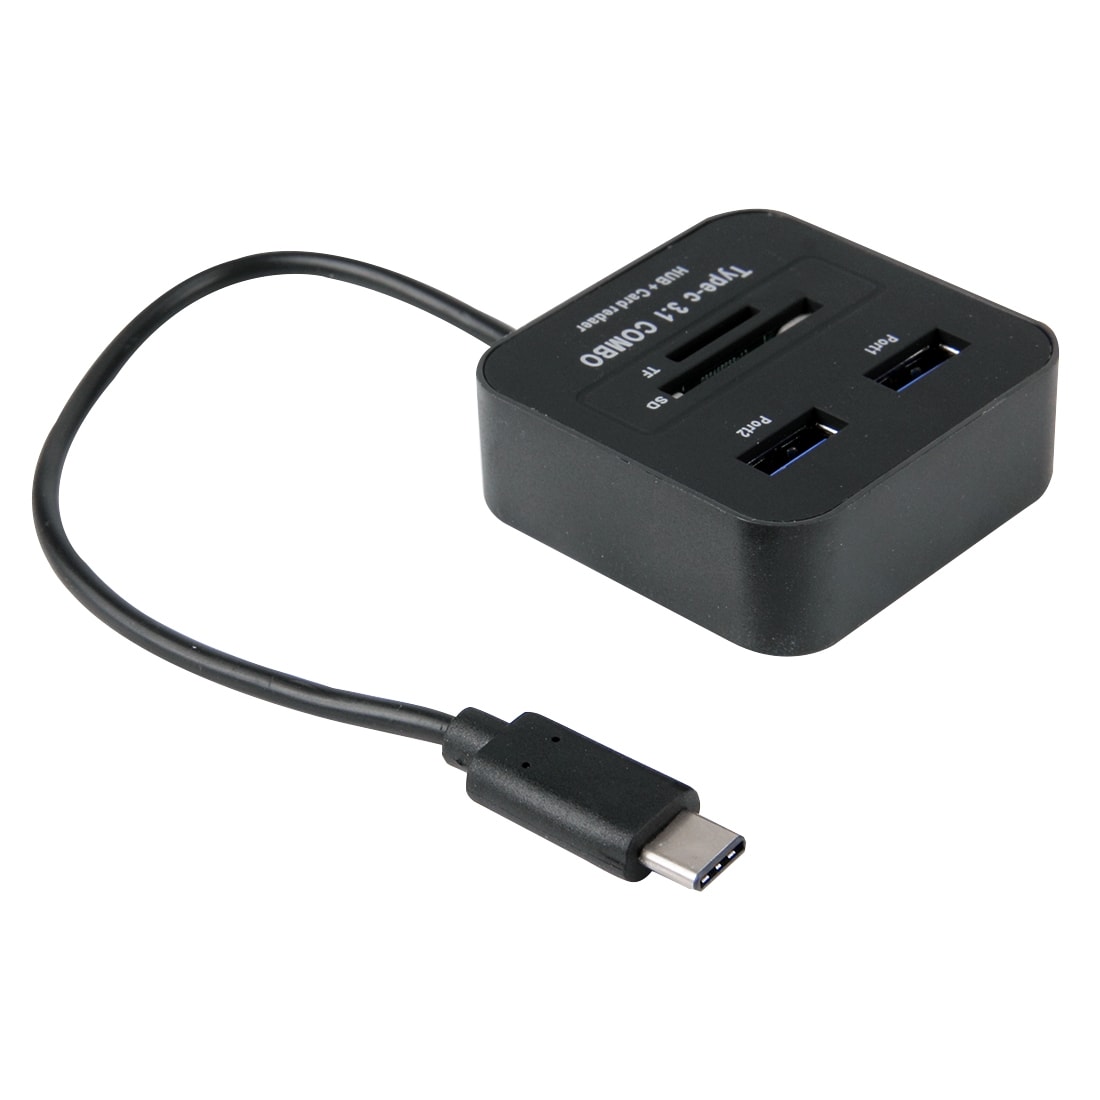 USB 3.1 Kortläsare & Hubb